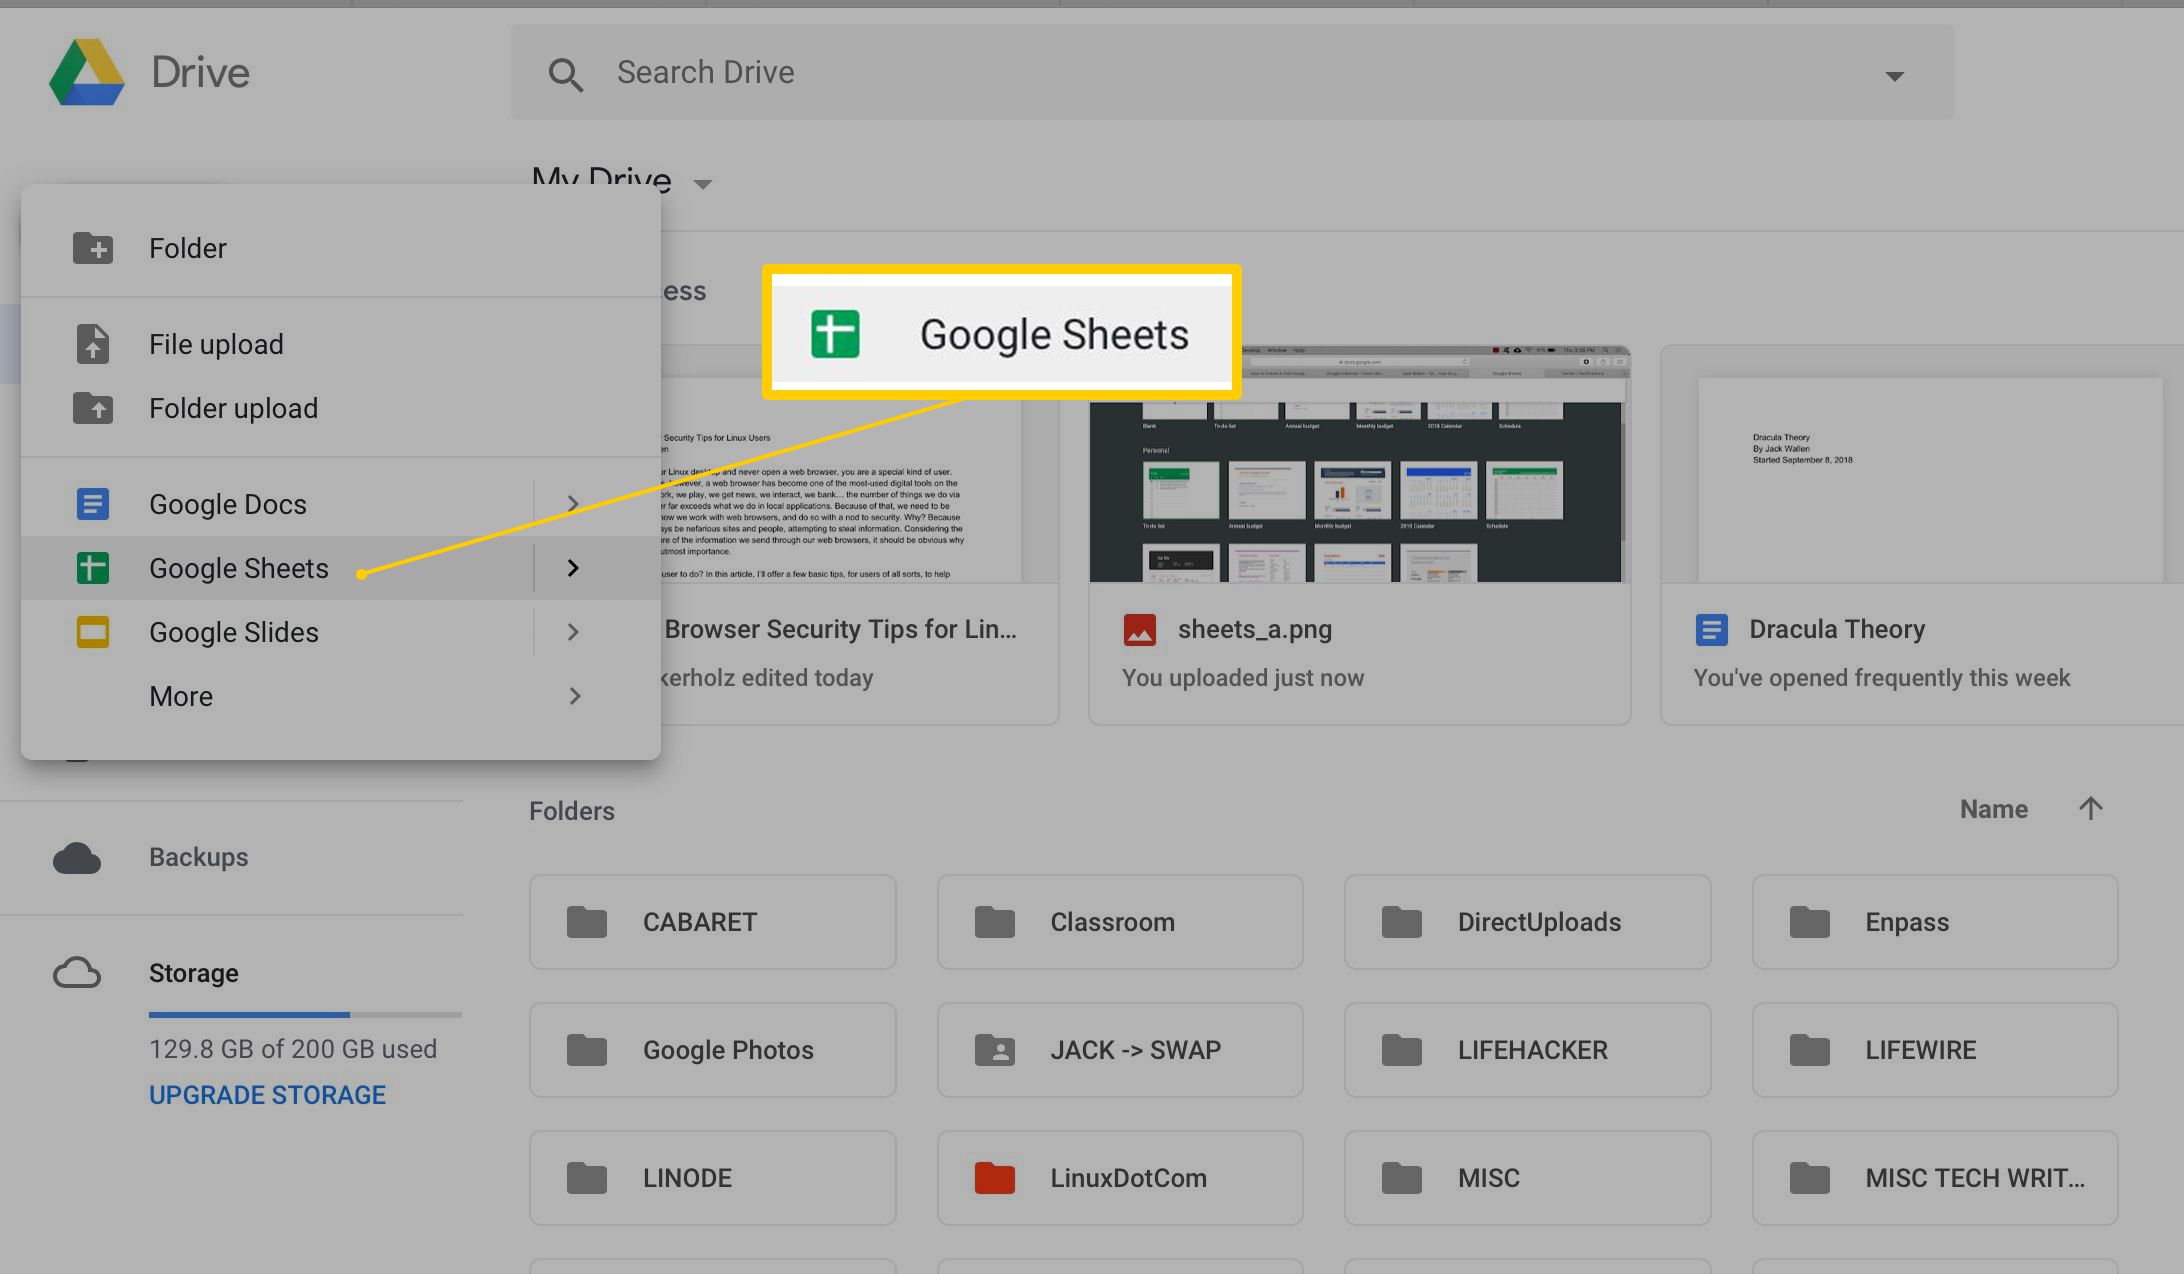 Nytt Google Sheet-menyalternativ i Google Drive